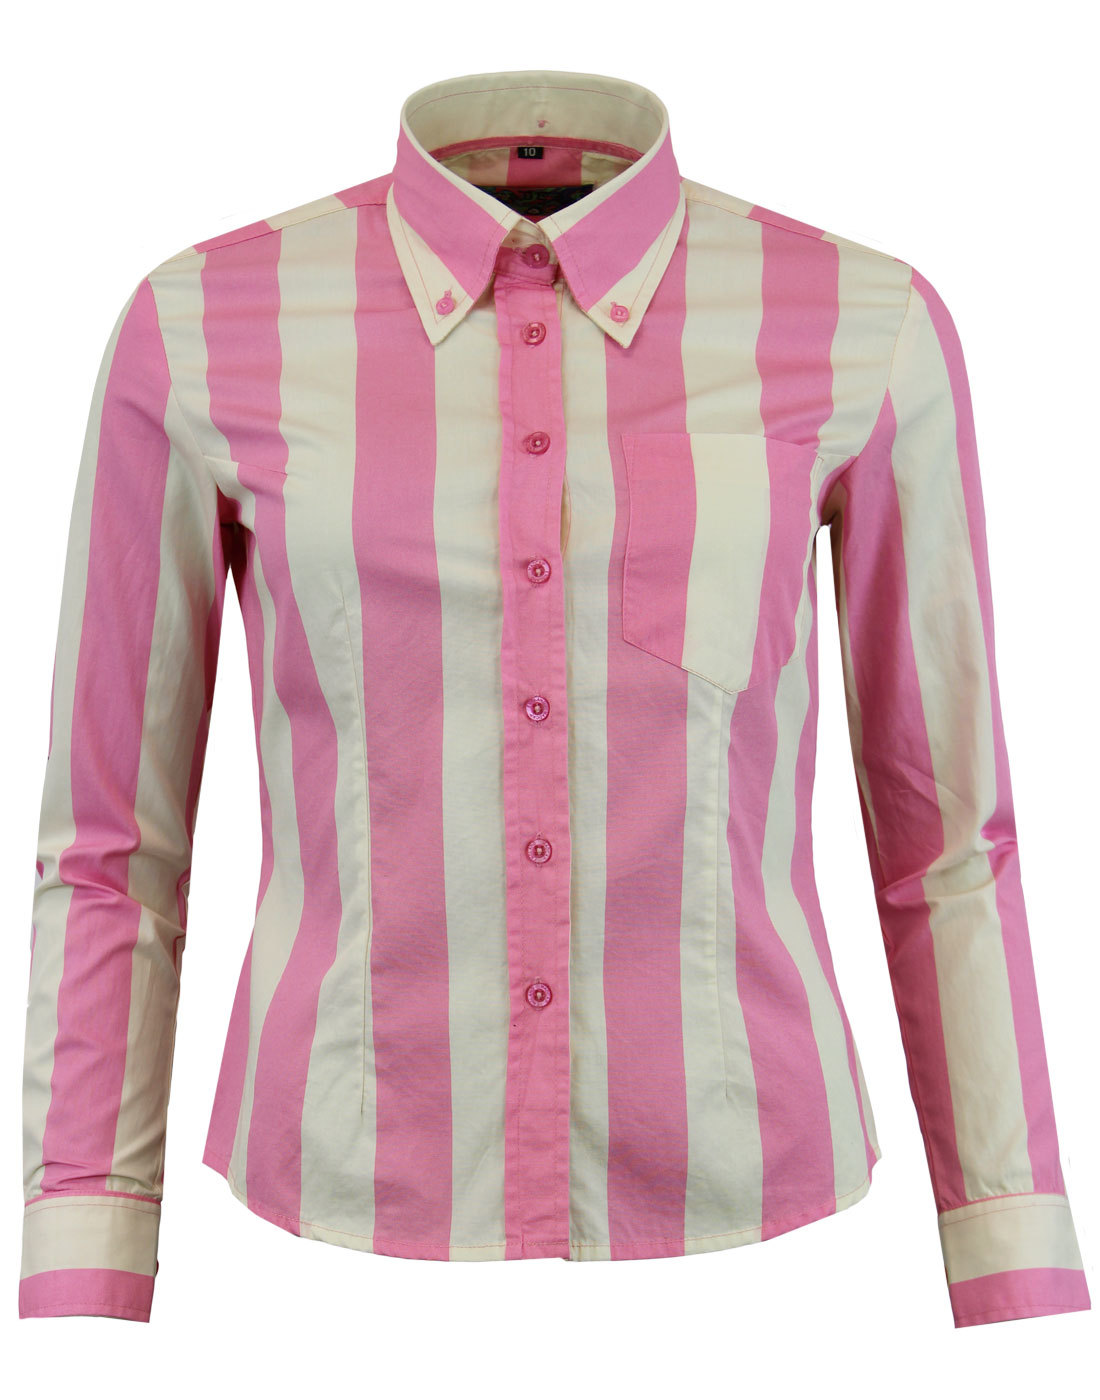 Sunflower' Women's Retro 1960s Mod Roller Candy Stripe Shirt in Pink